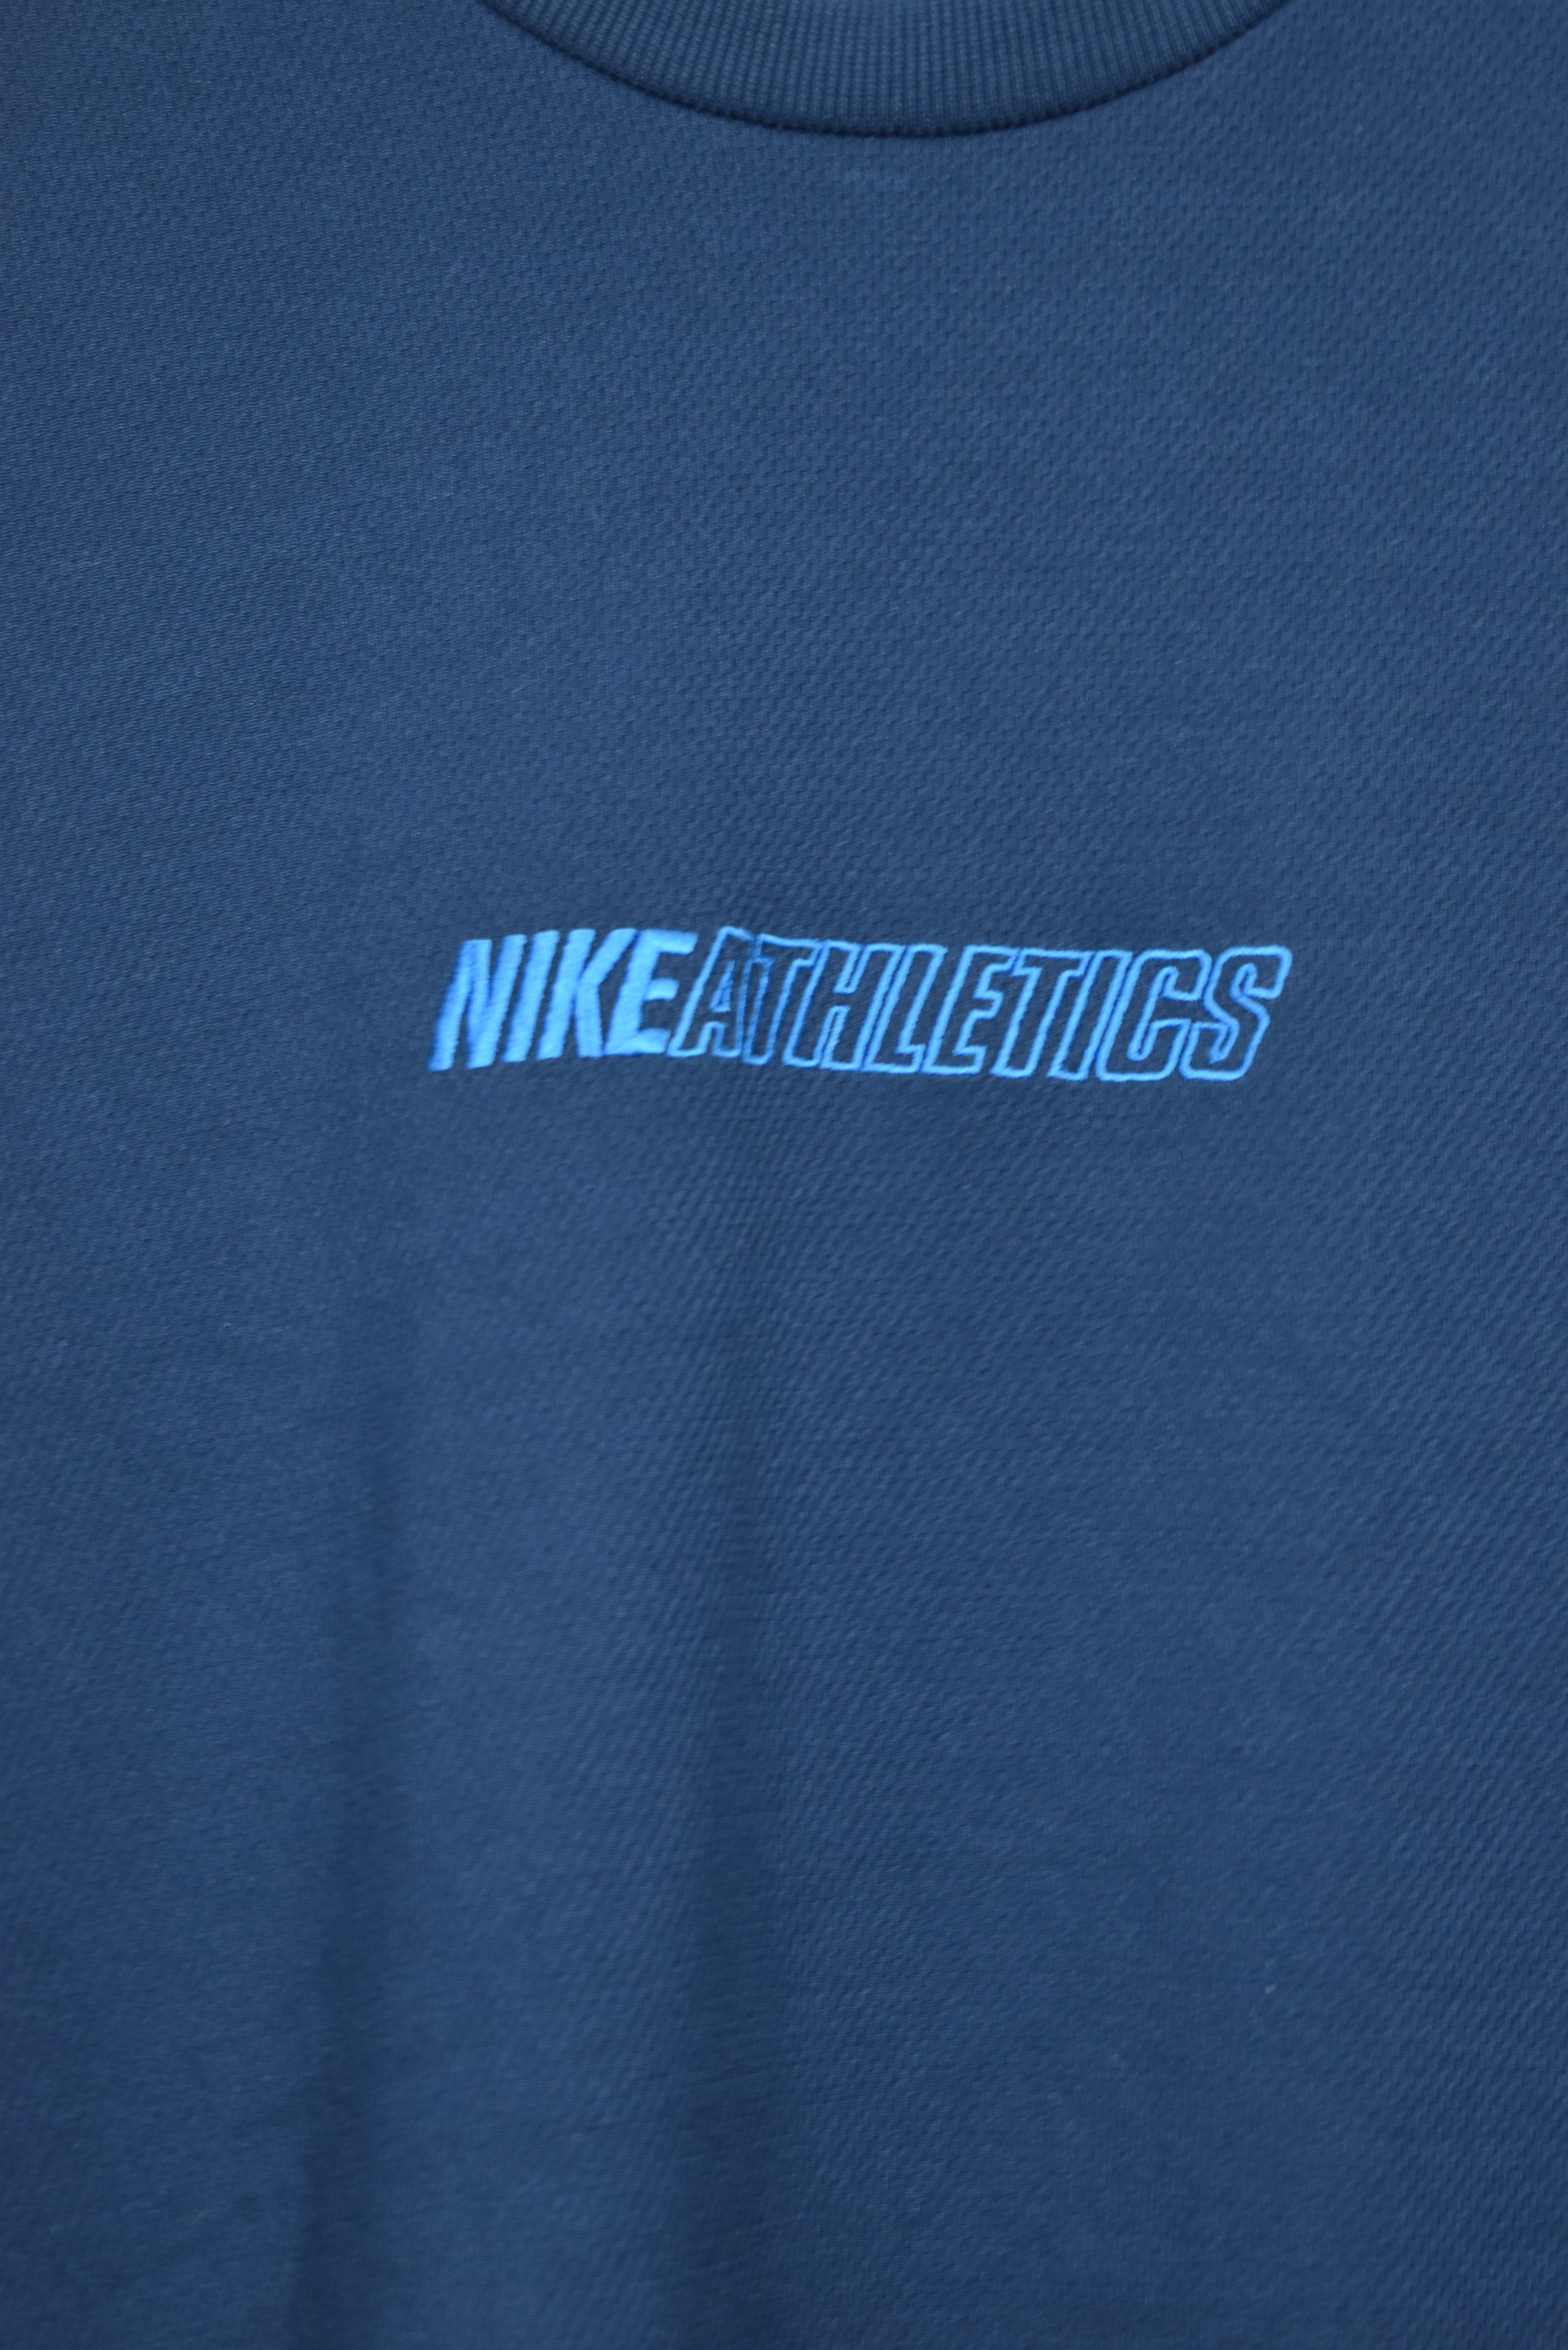 Vintage Nike Athletic Embroidery Mesh T Shirt Xlarge